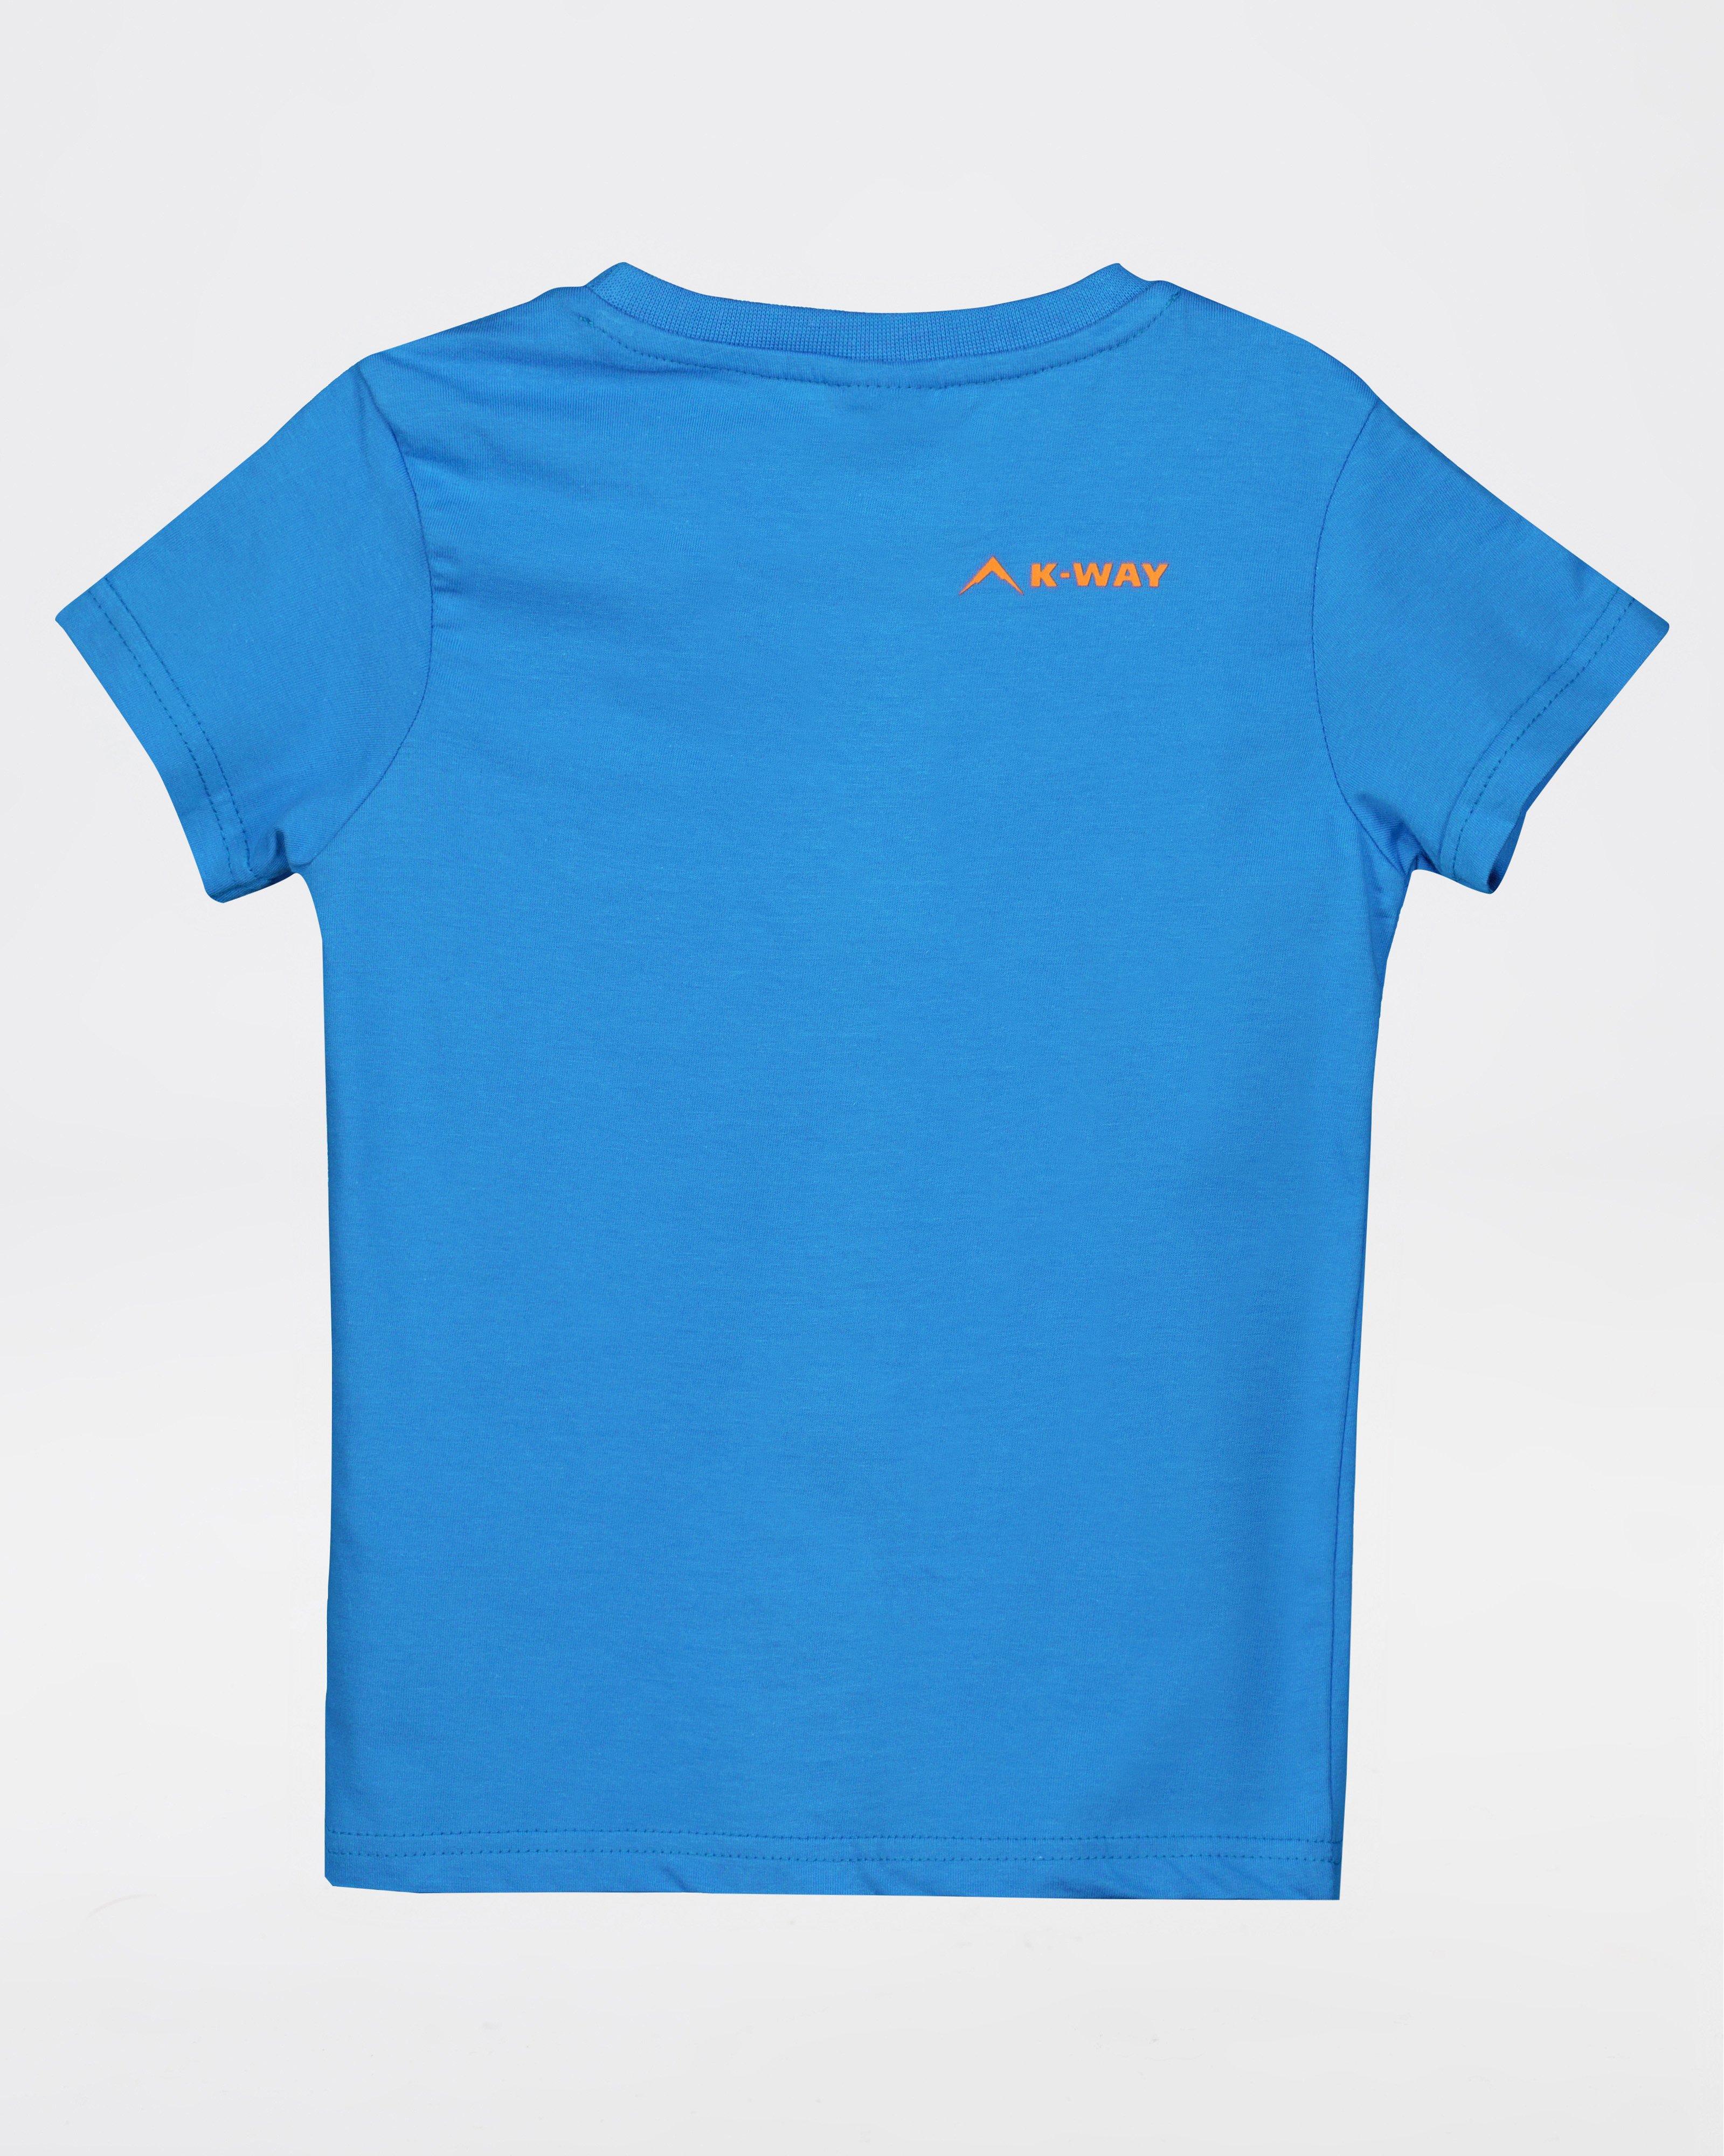 K-Way Kids Graphic T-shirt -  Blue